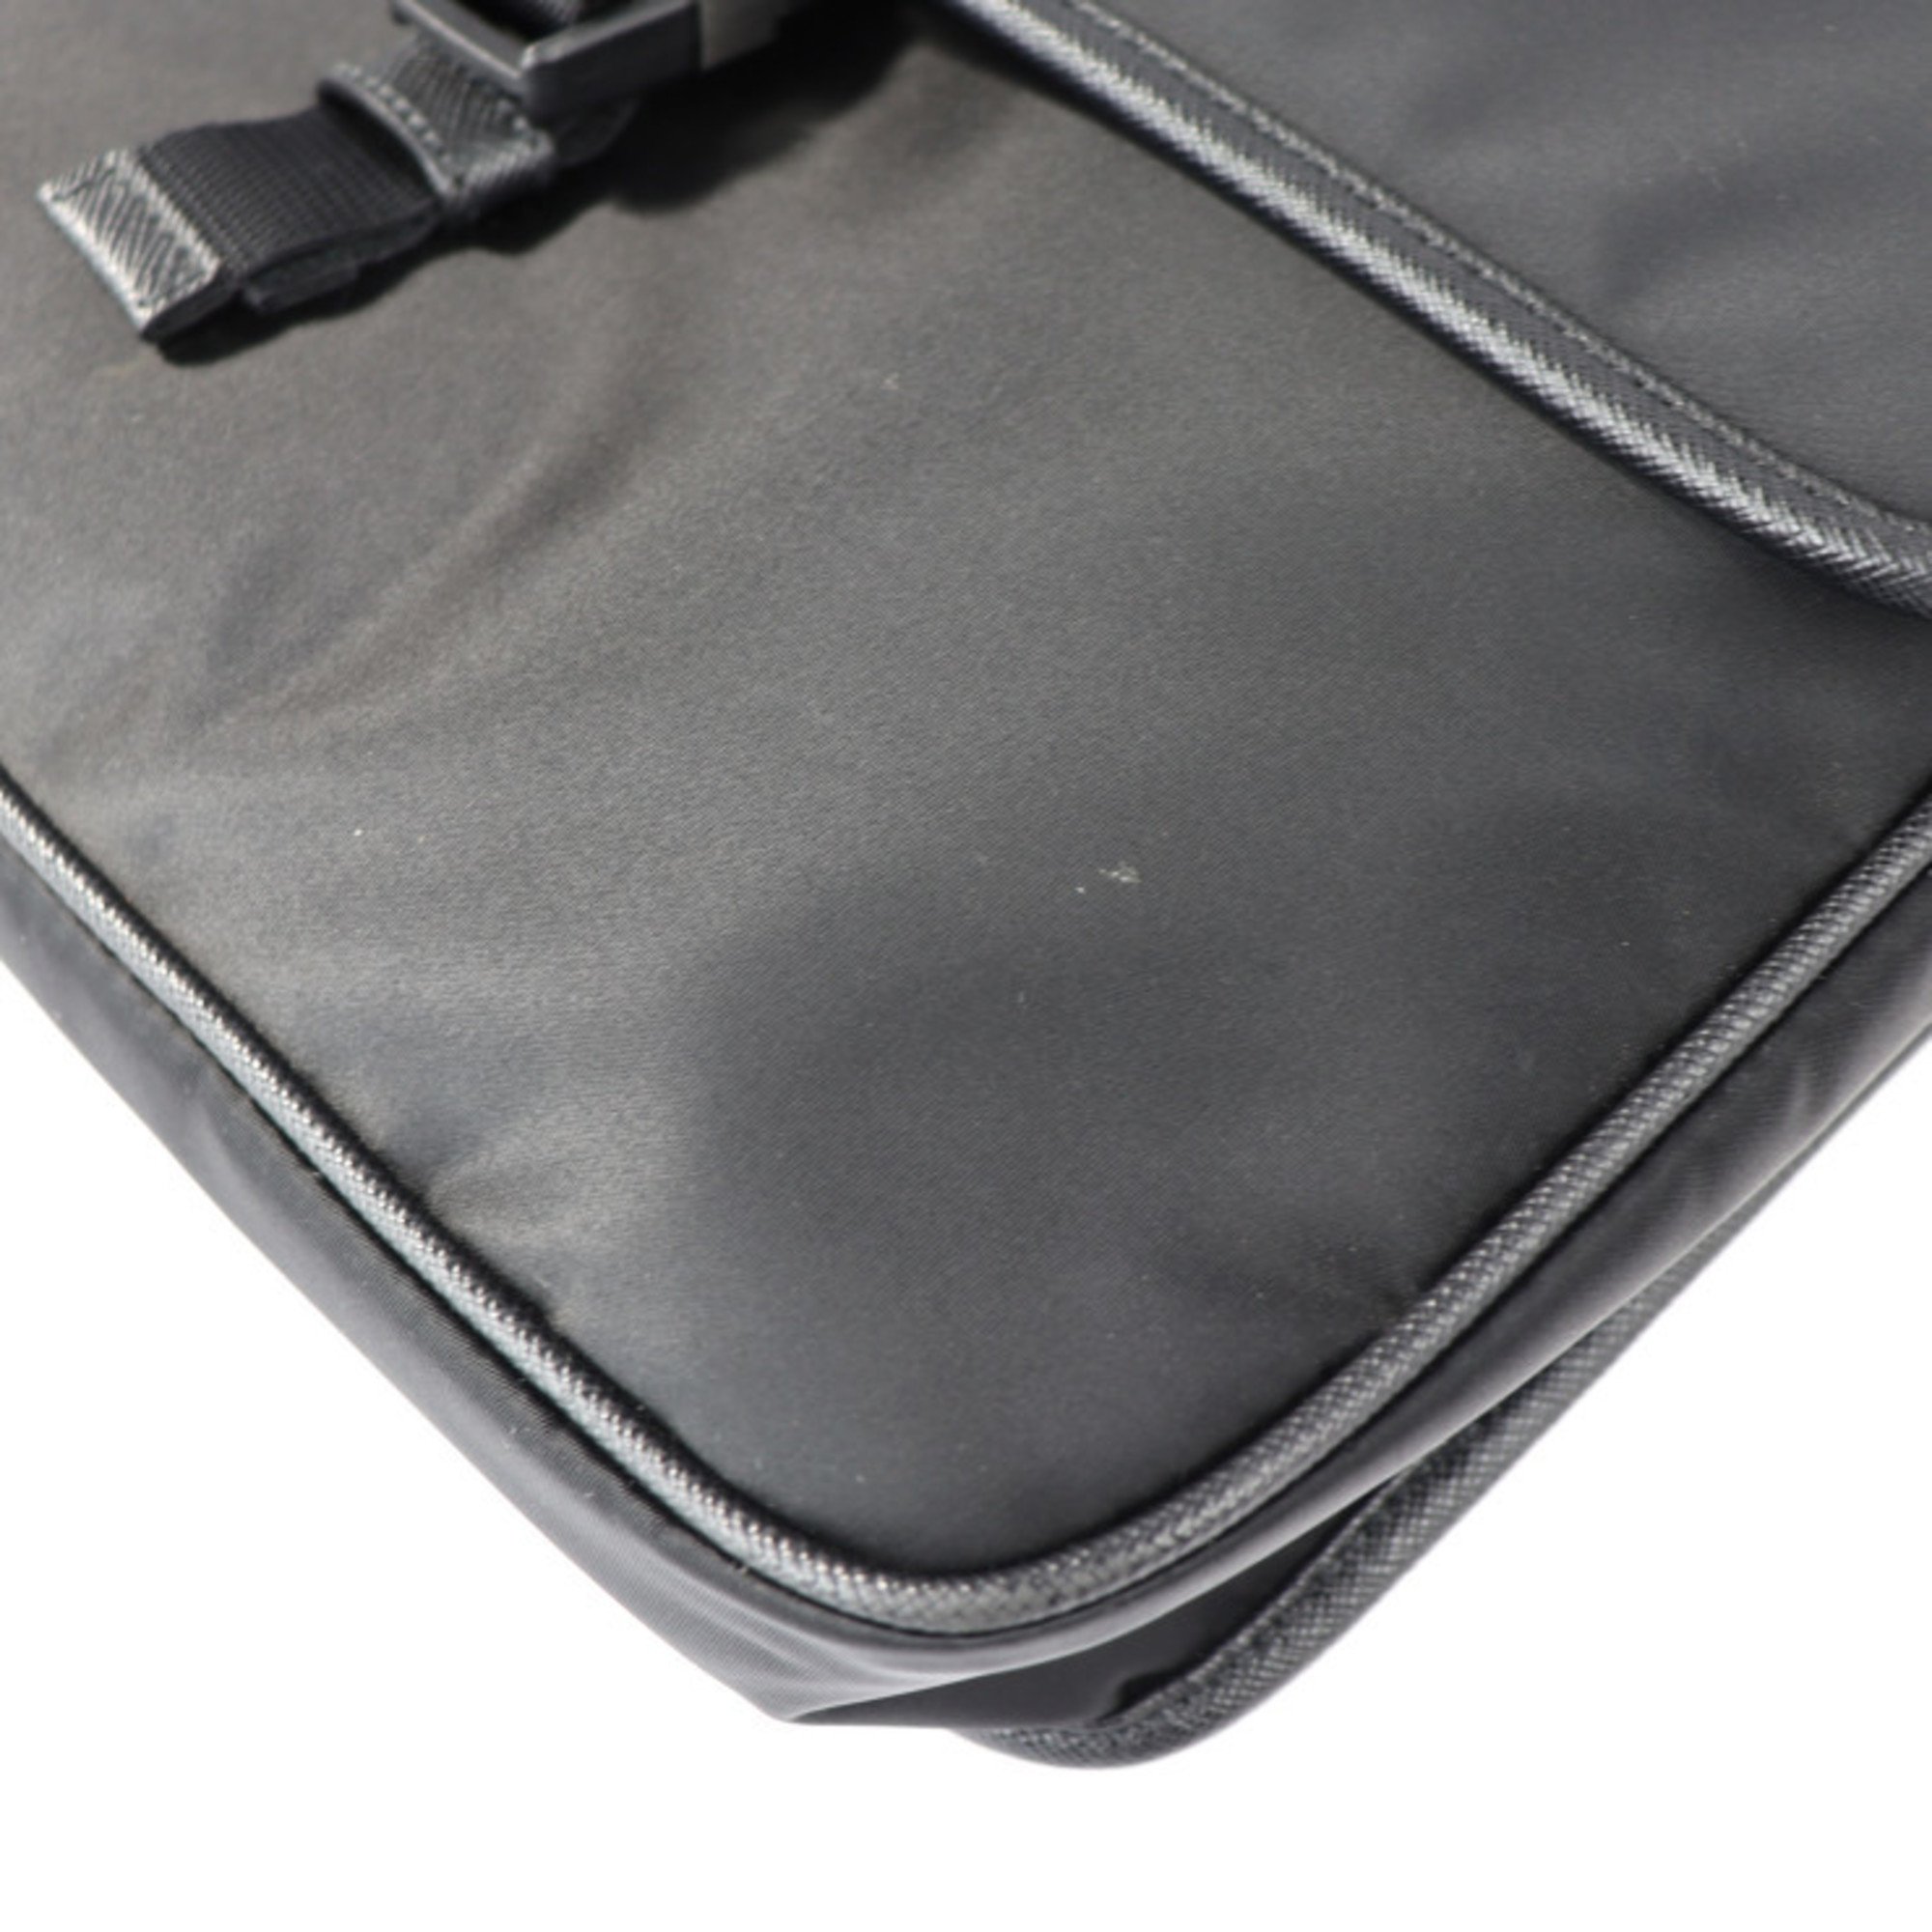 PRADA Prada shoulder bag 2VD951 nylon black leather silver metal fittings messenger triangle logo mark